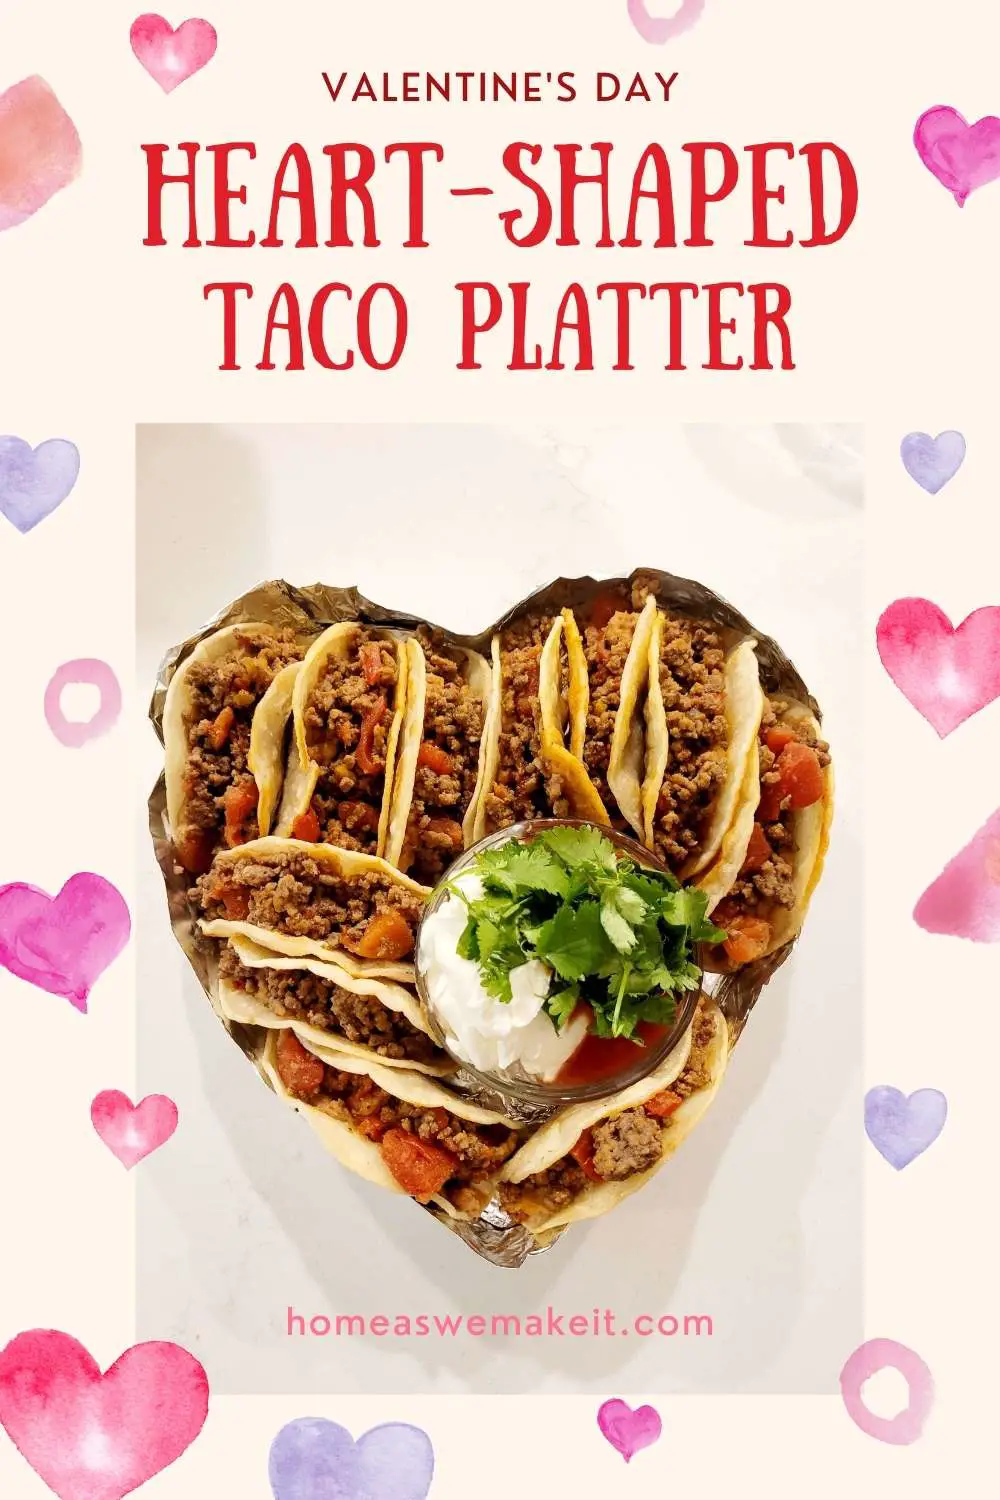 How to Make a Heart-Shaped Taco Platter